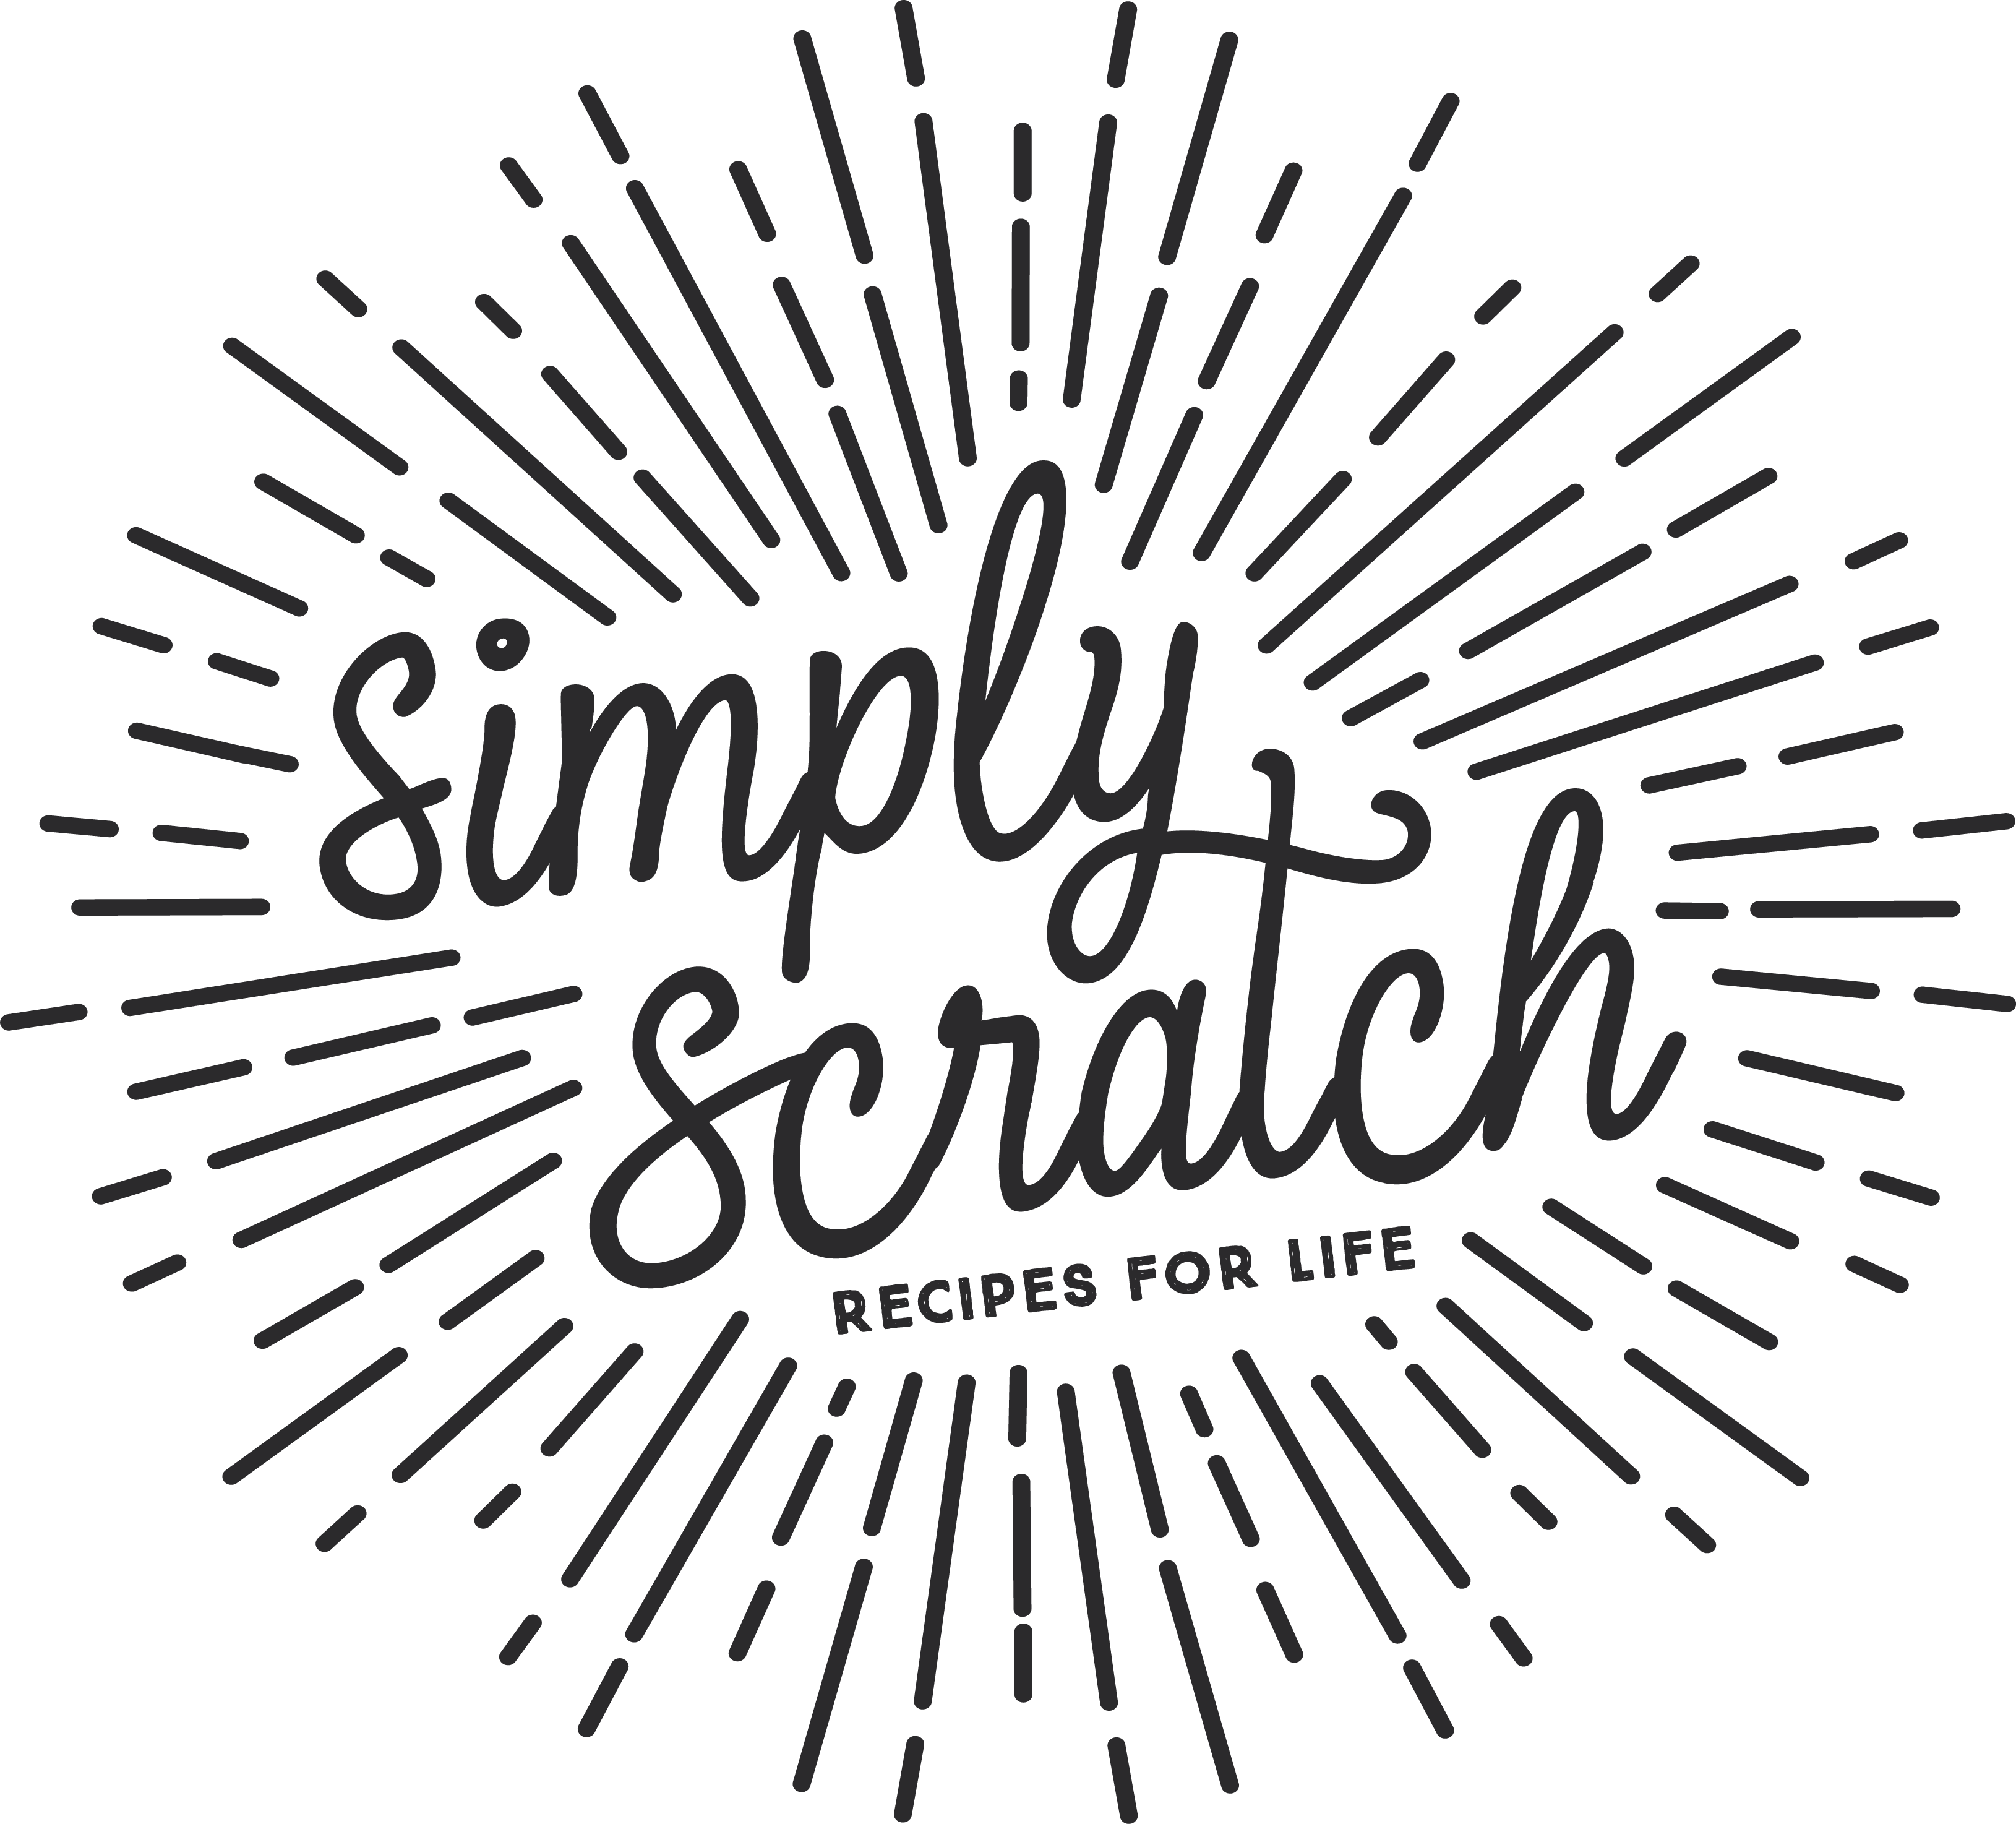 https://www.simplyscratch.com/wp-content/uploads/2020/01/simplyscratch_logo.vFINAL.png